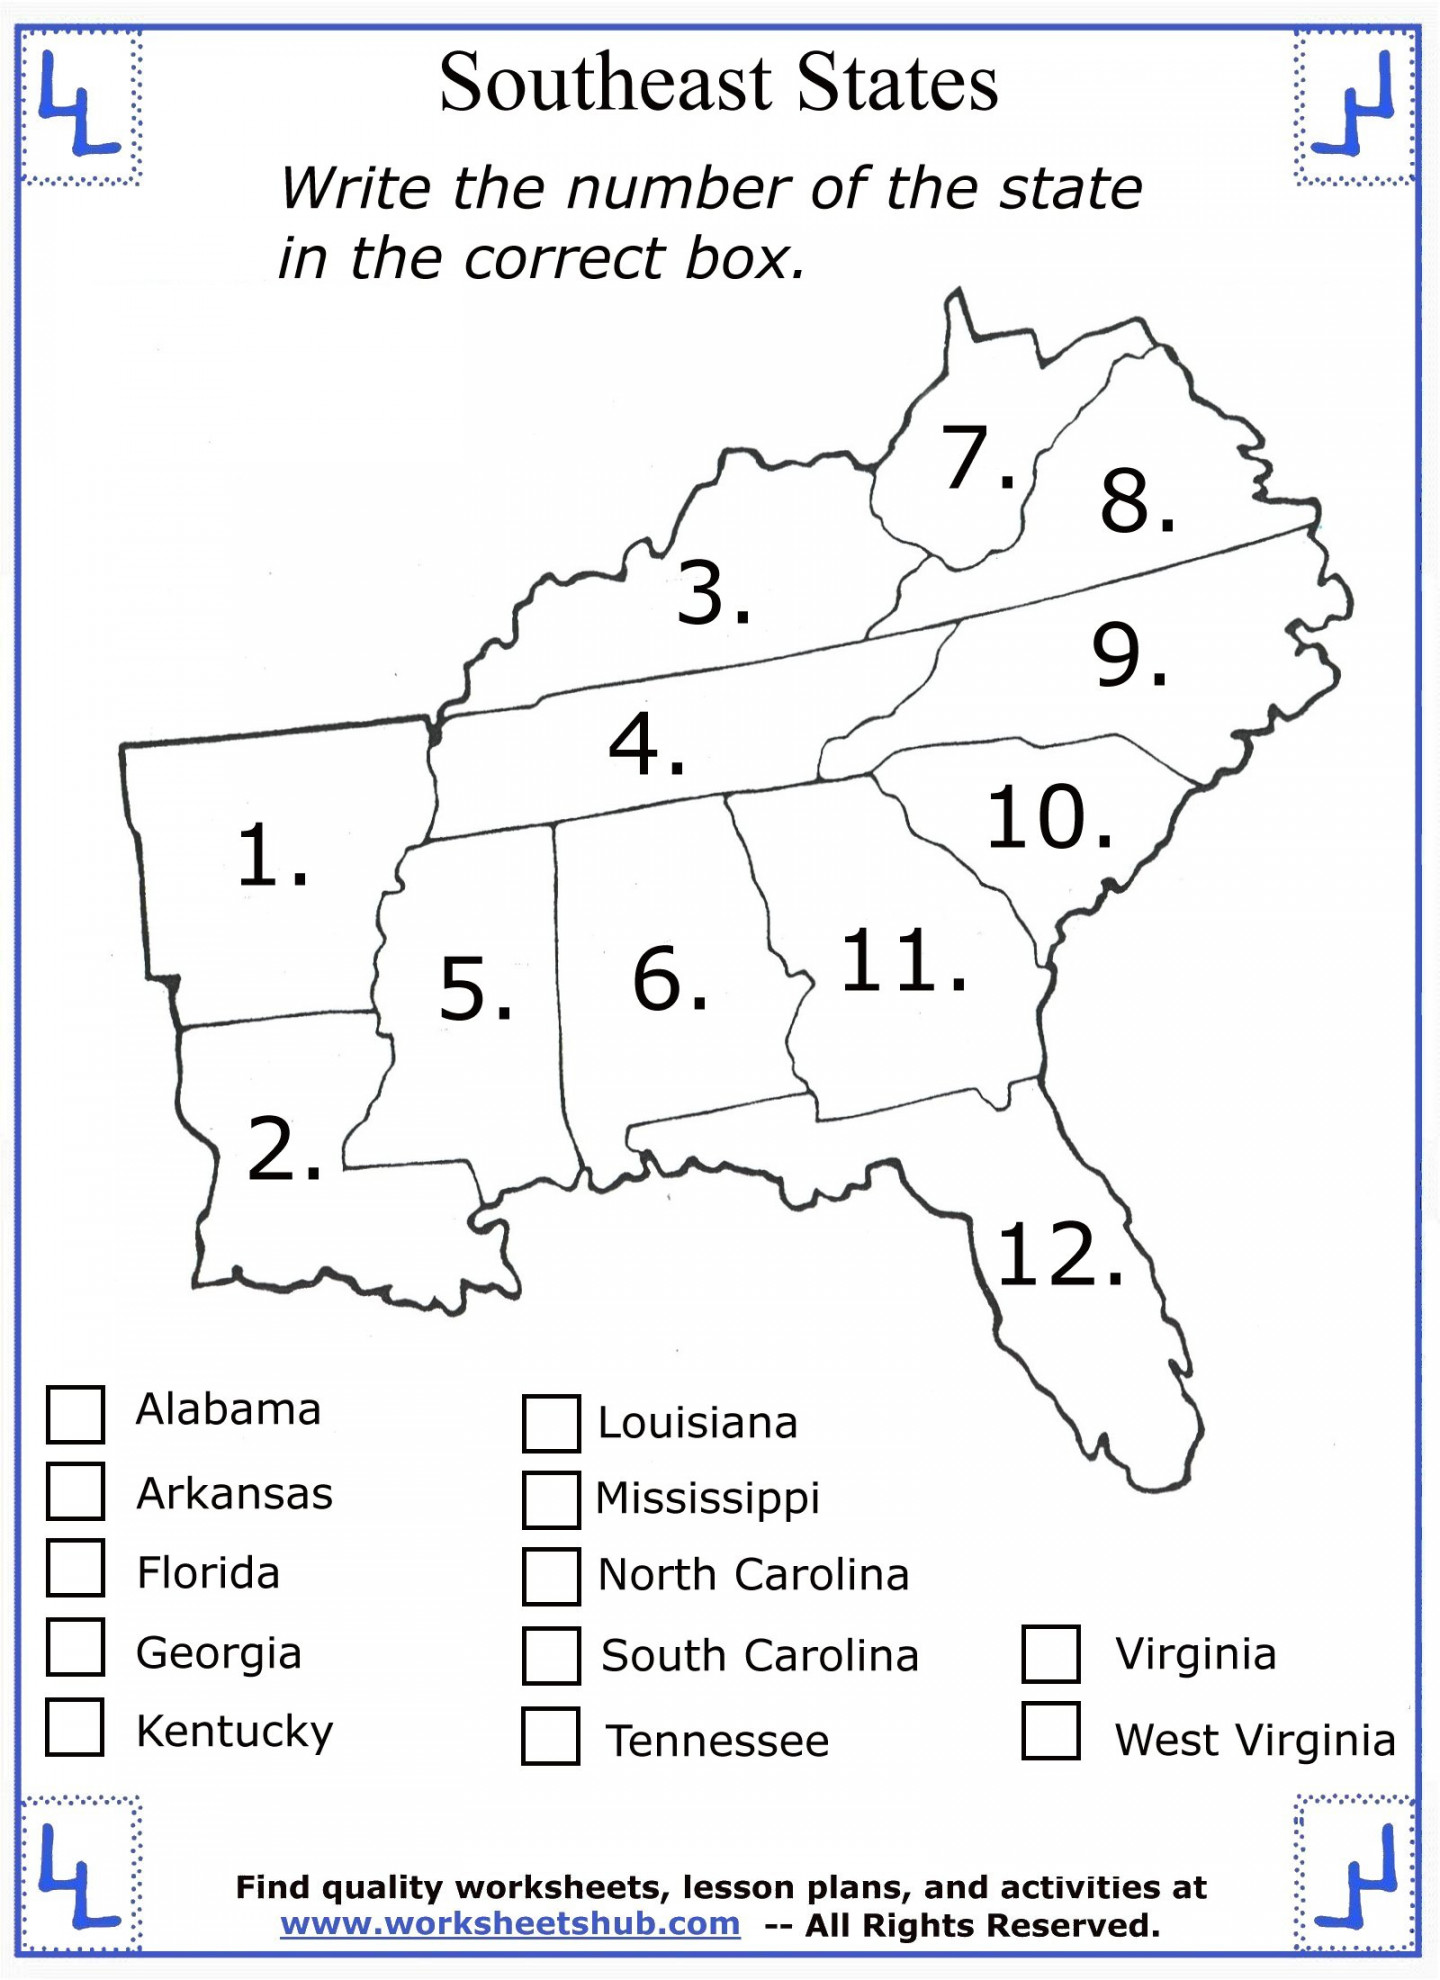 th Grade Social Studies - Southeast Region States